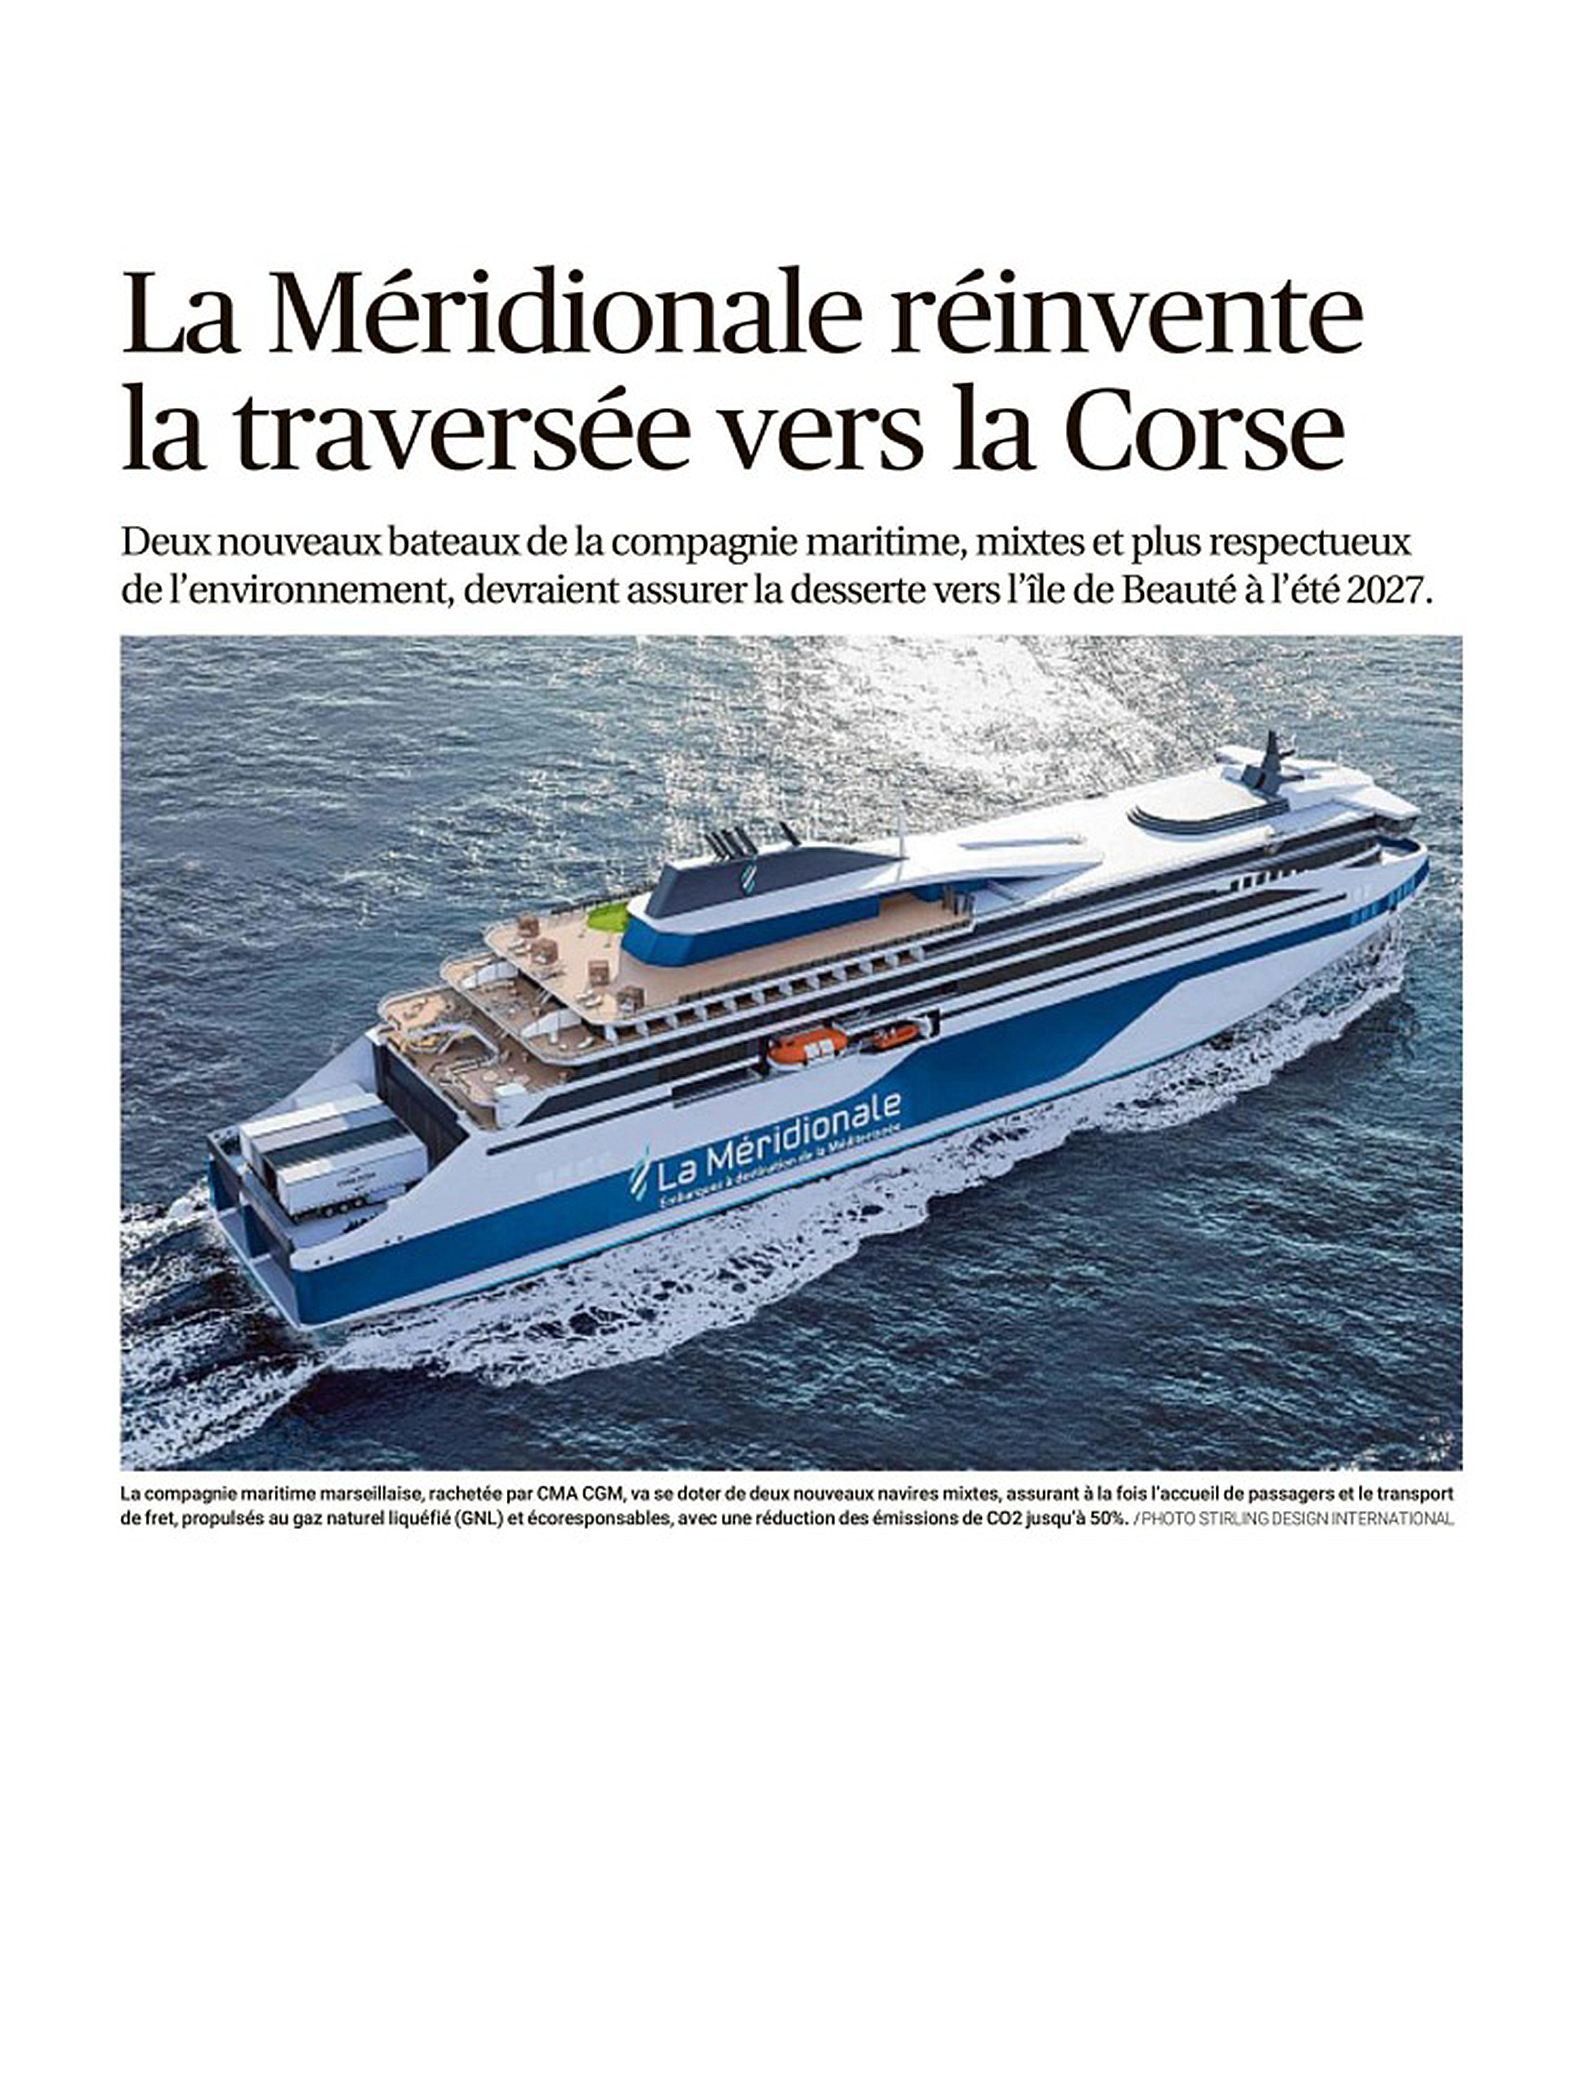 Article by La Provence